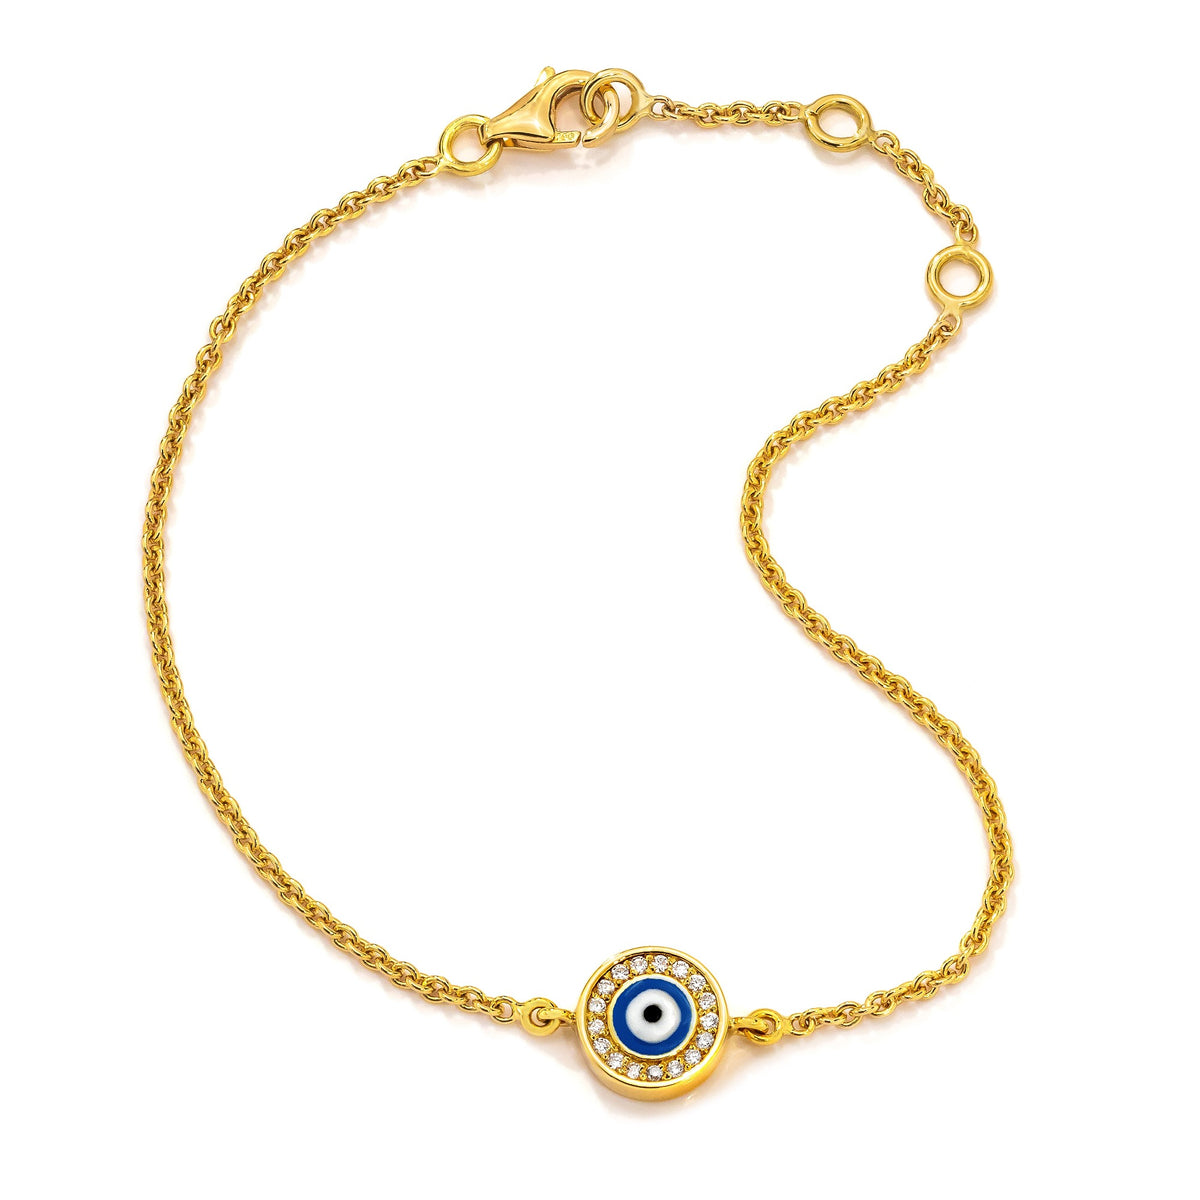 18k Gold Bracelet with a navy evil eye charm with diamond detail.